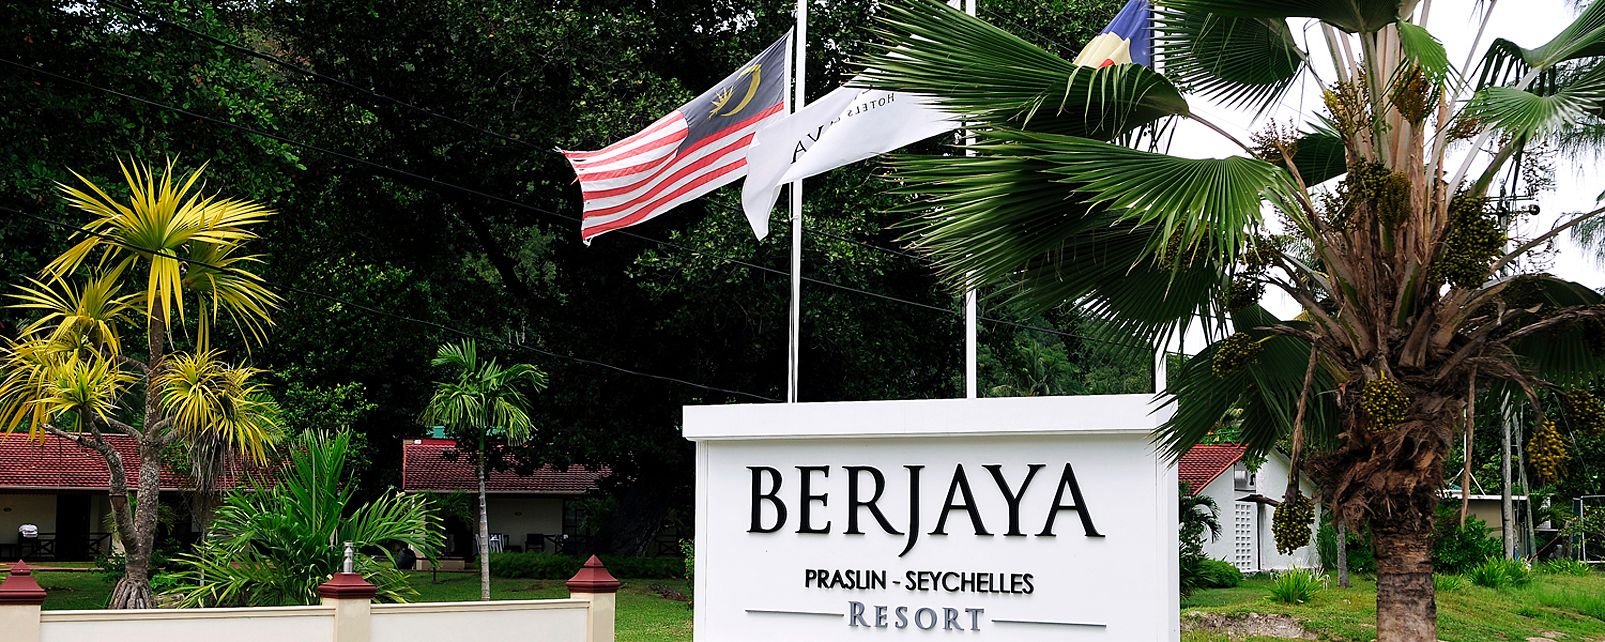 Hotel Berjaya Praslin Resort Seychelles